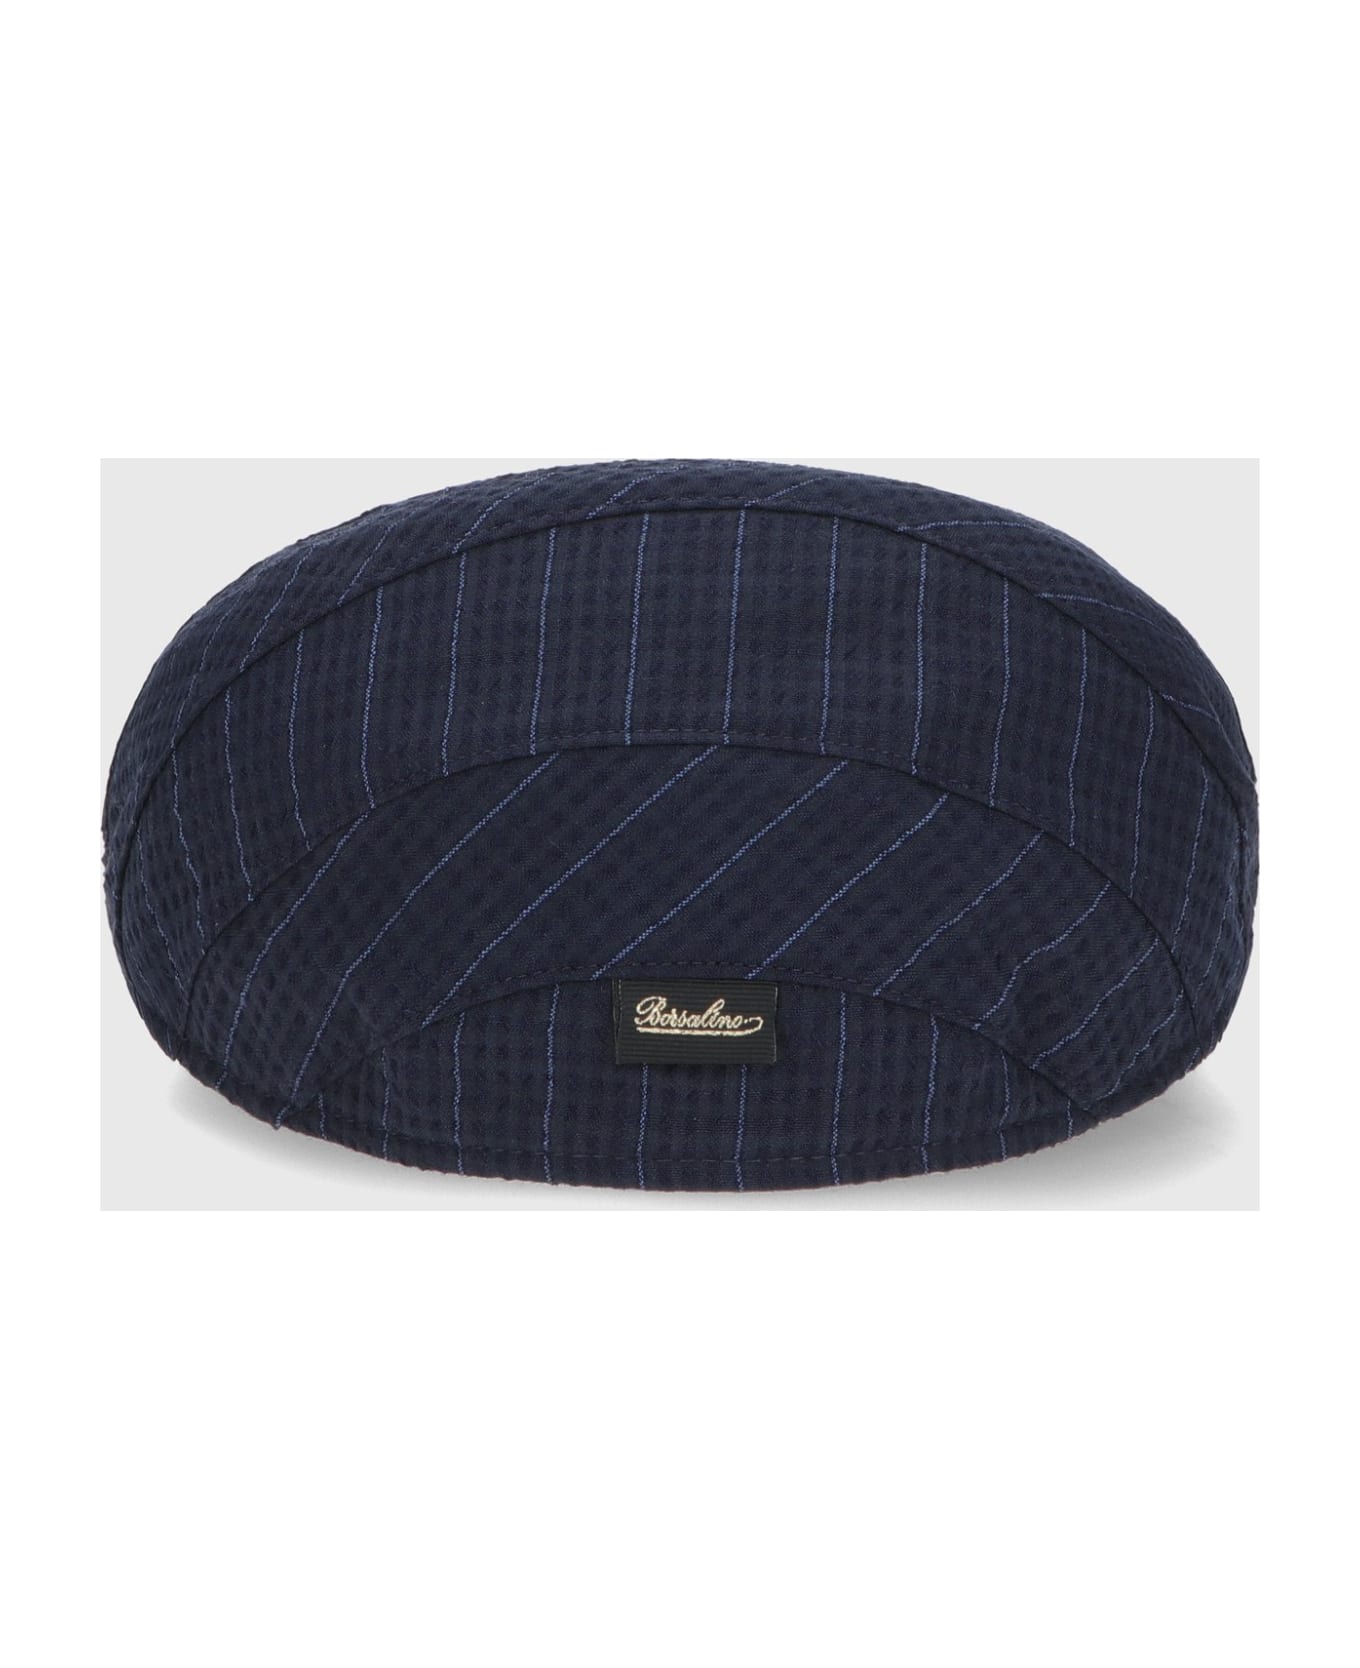 Borsalino Vincenzo Soft Flat Cap - BLACK/LIGHT BLUE STRIPES 帽子